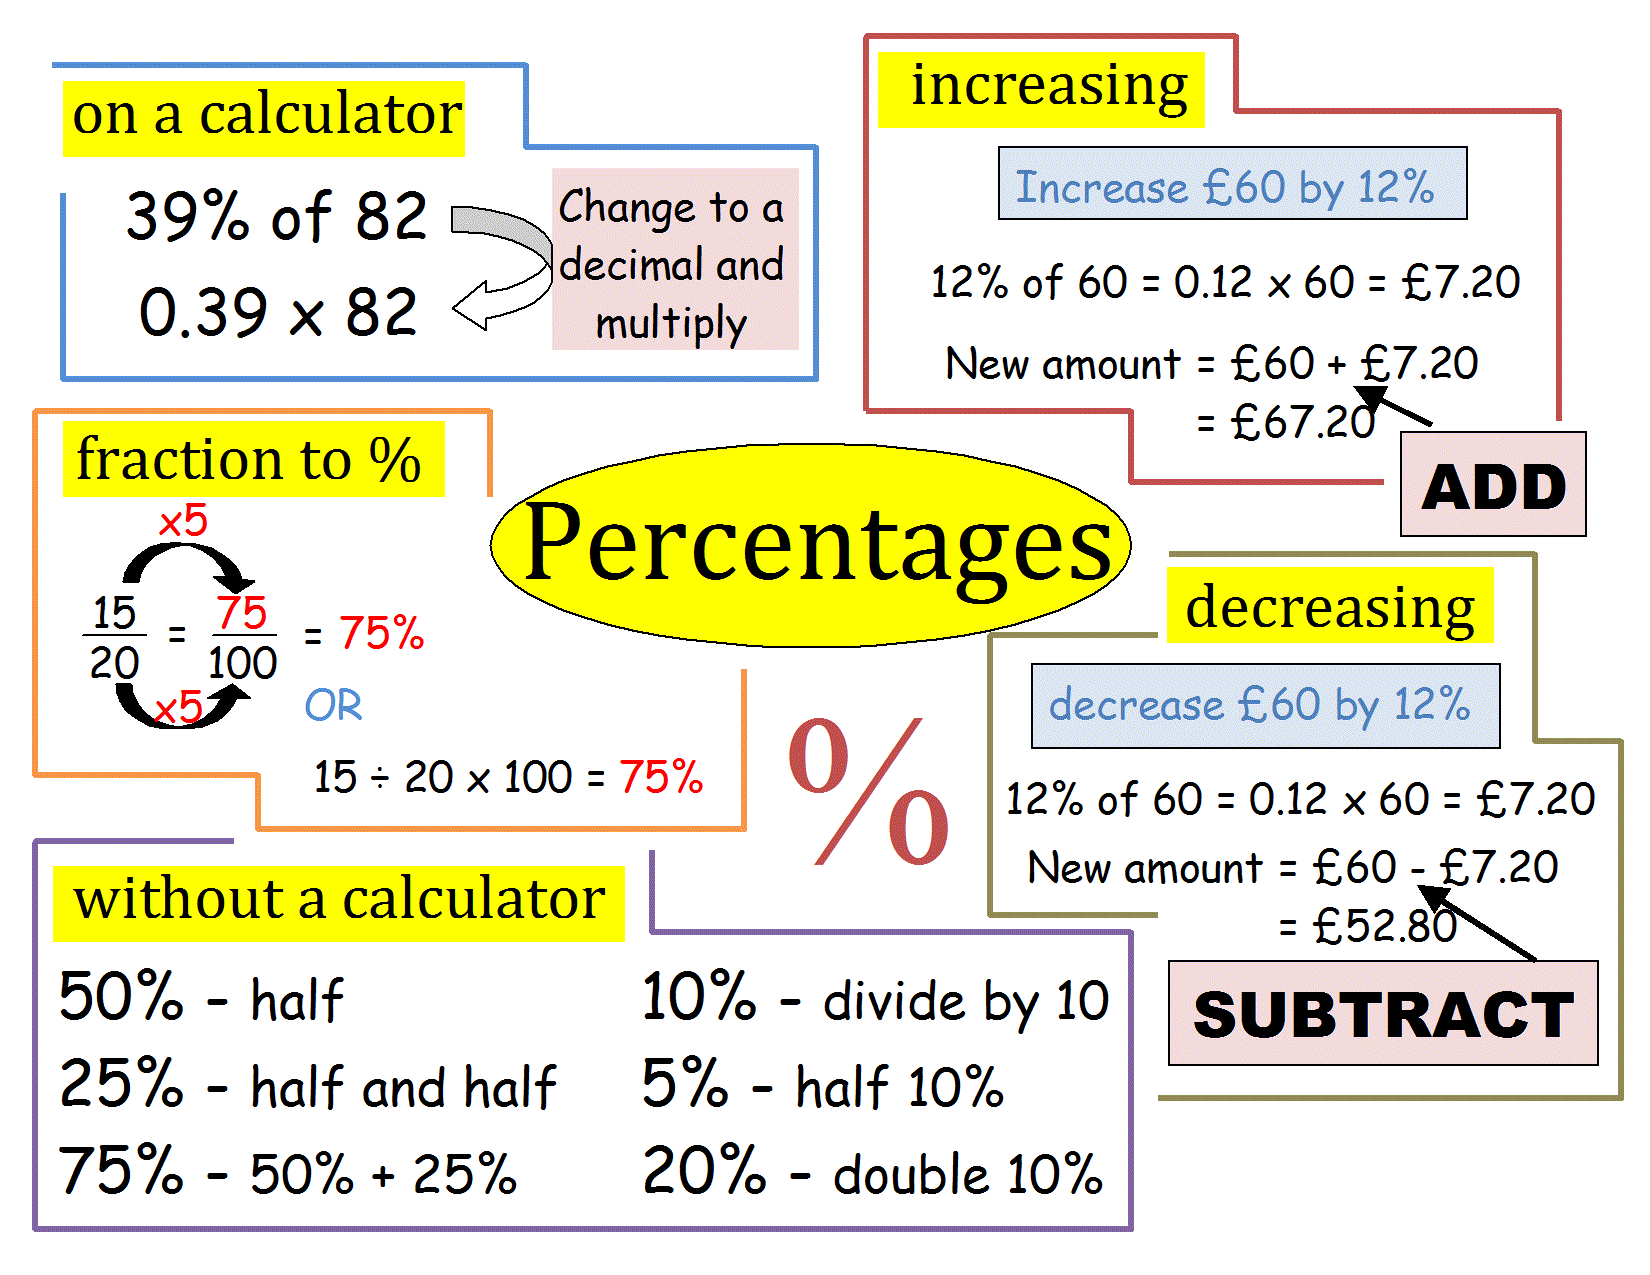 Decimals, Percentages &amp; Fractions - B. R. E. A. K. (http://break2012.weebly.com/uploads/1/3/5/8/13582971/percentages.gif)